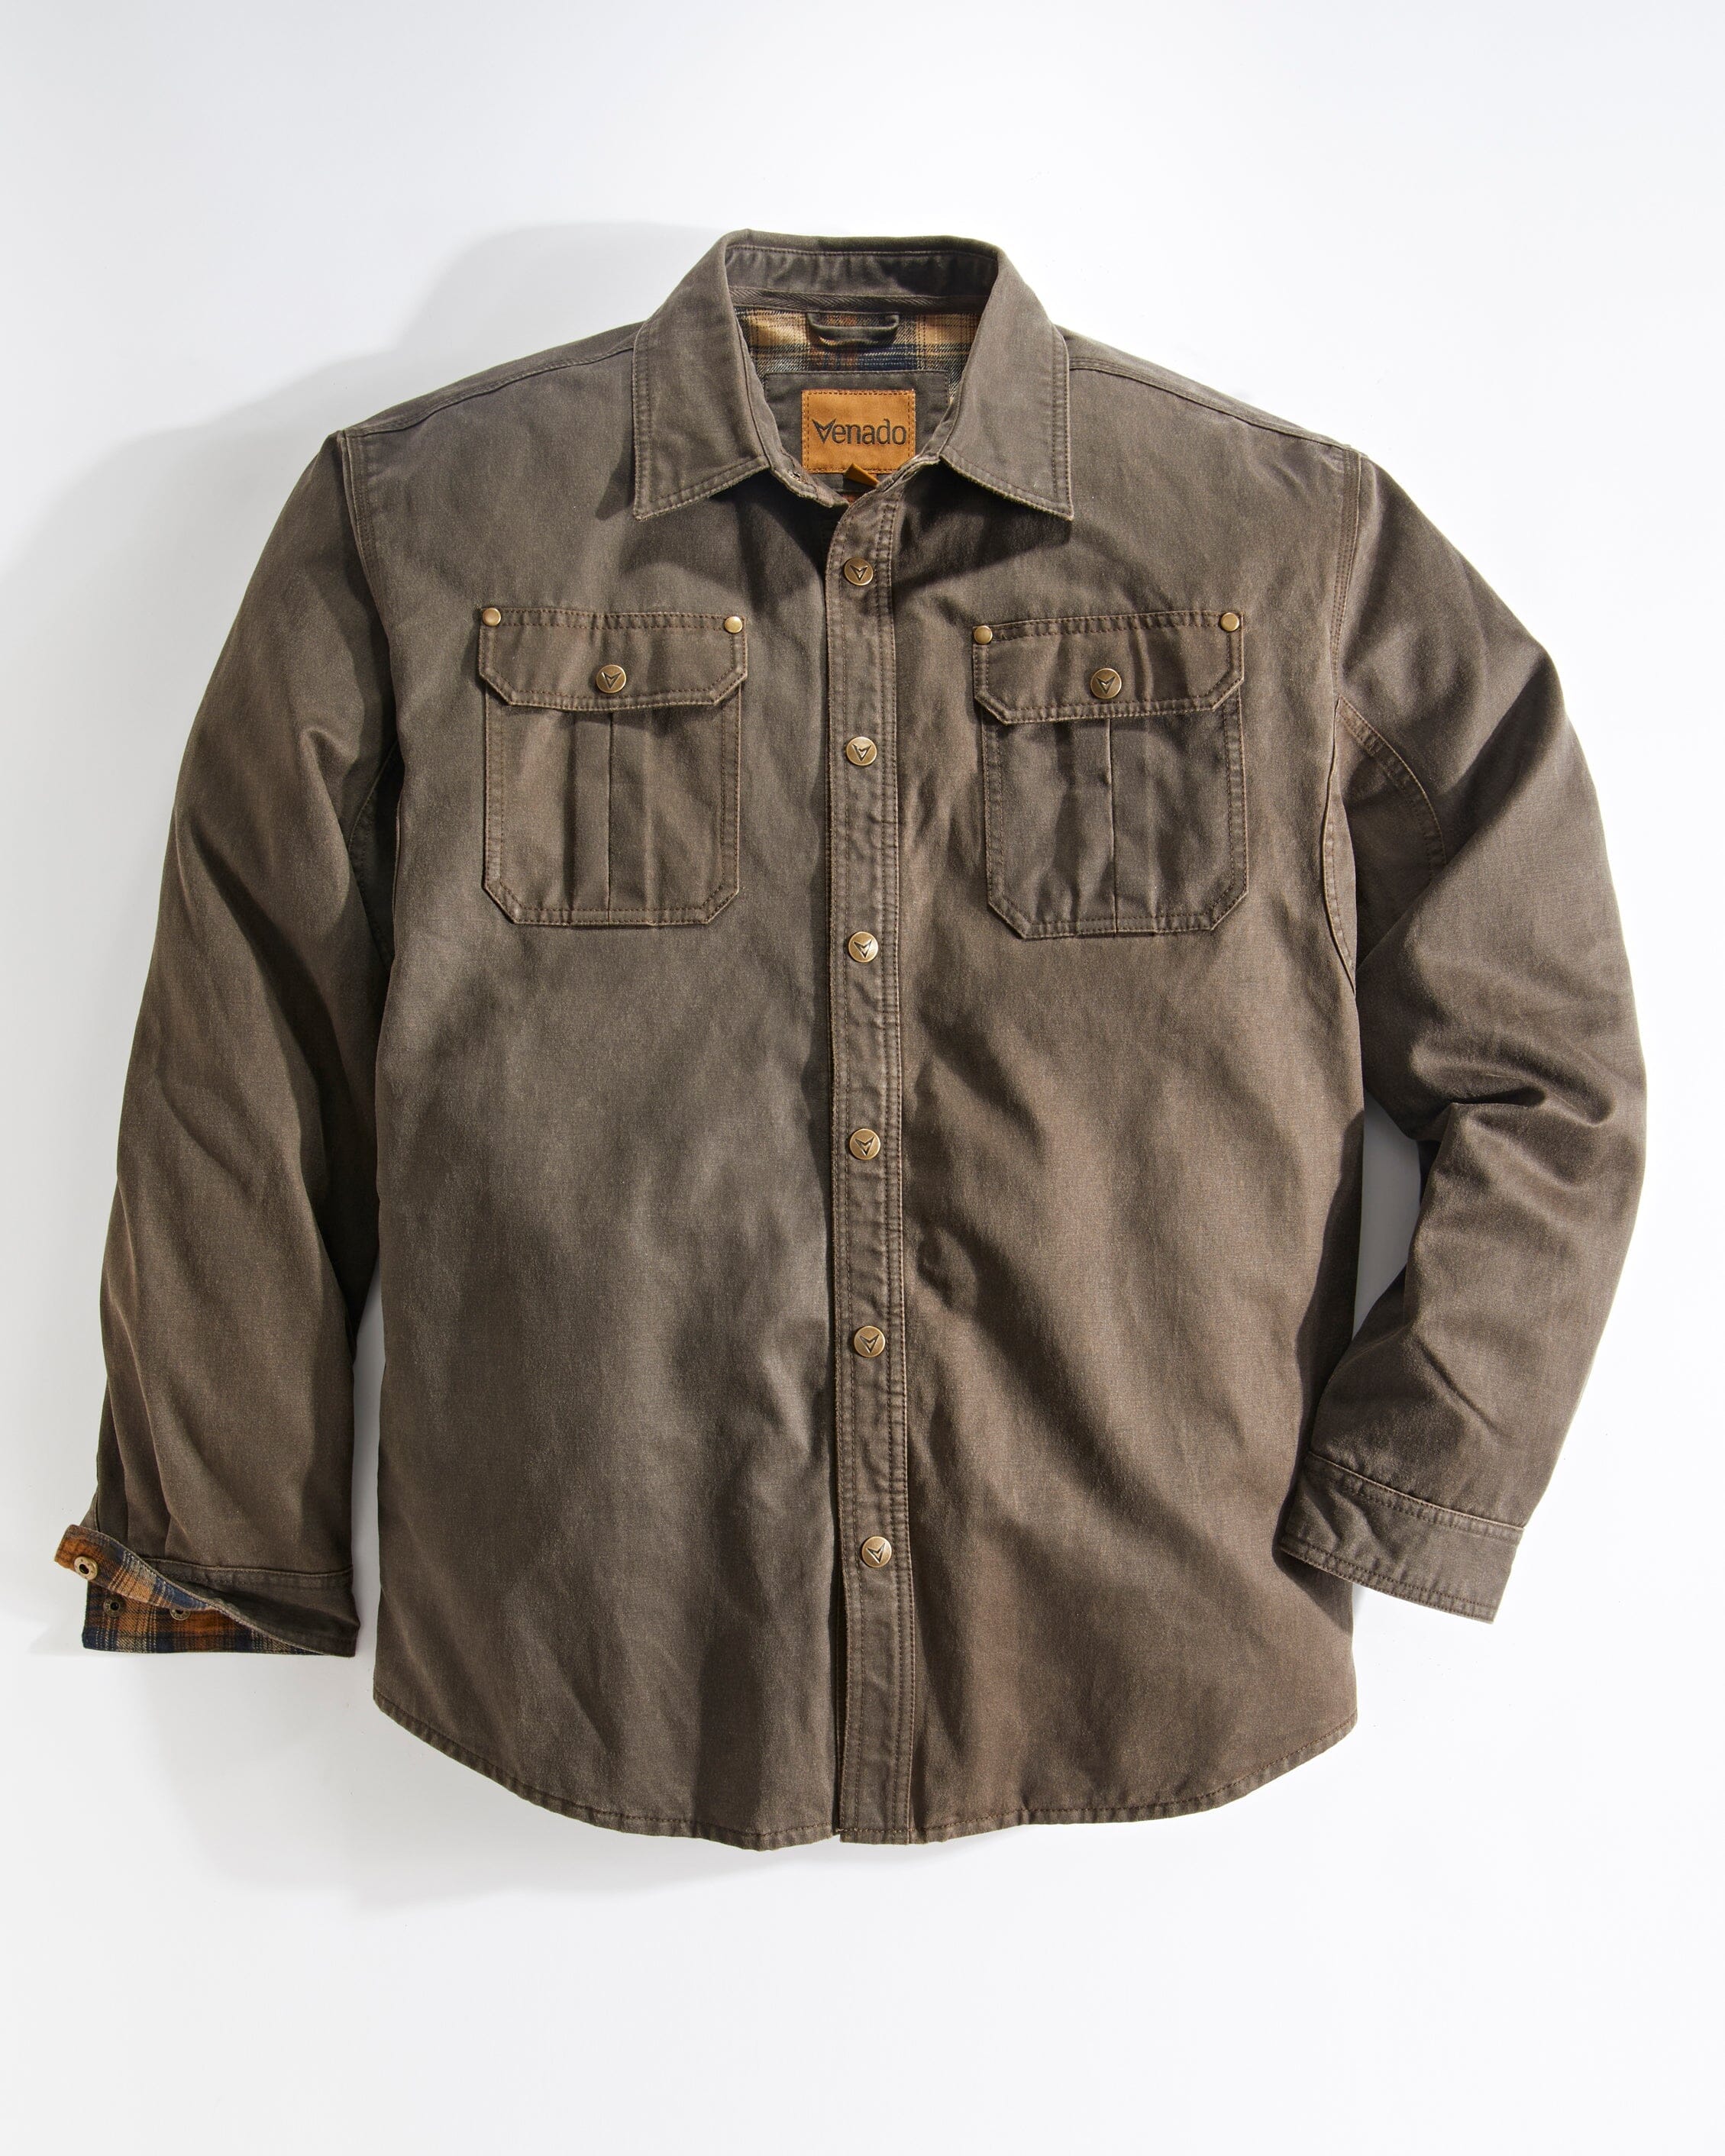 Bountyman Concealed Carry Shirt Jacket – Venado